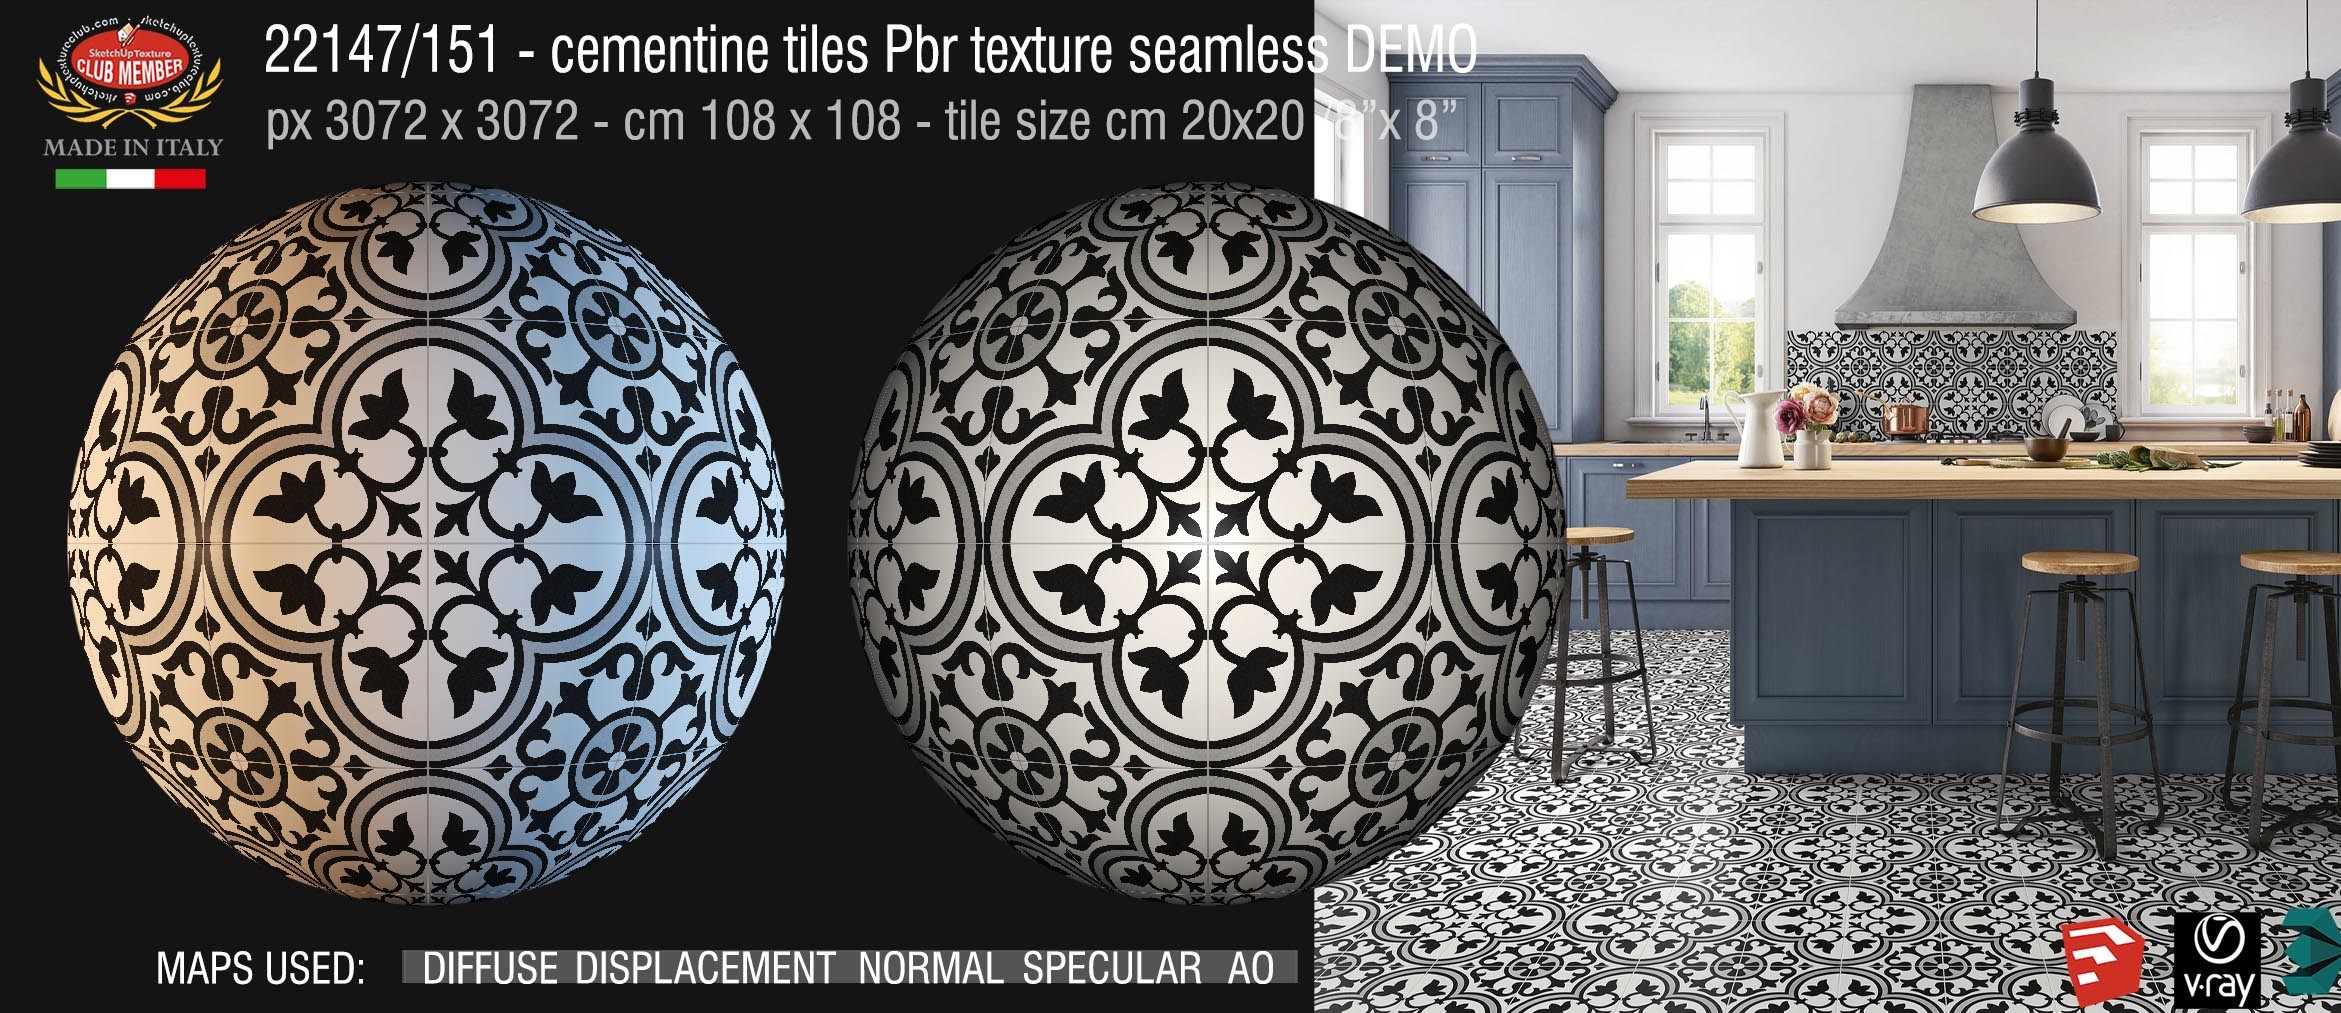 22147/151 Cementine tiles Pbr texture seamless DEMO -  porcelain stoneware concrete look